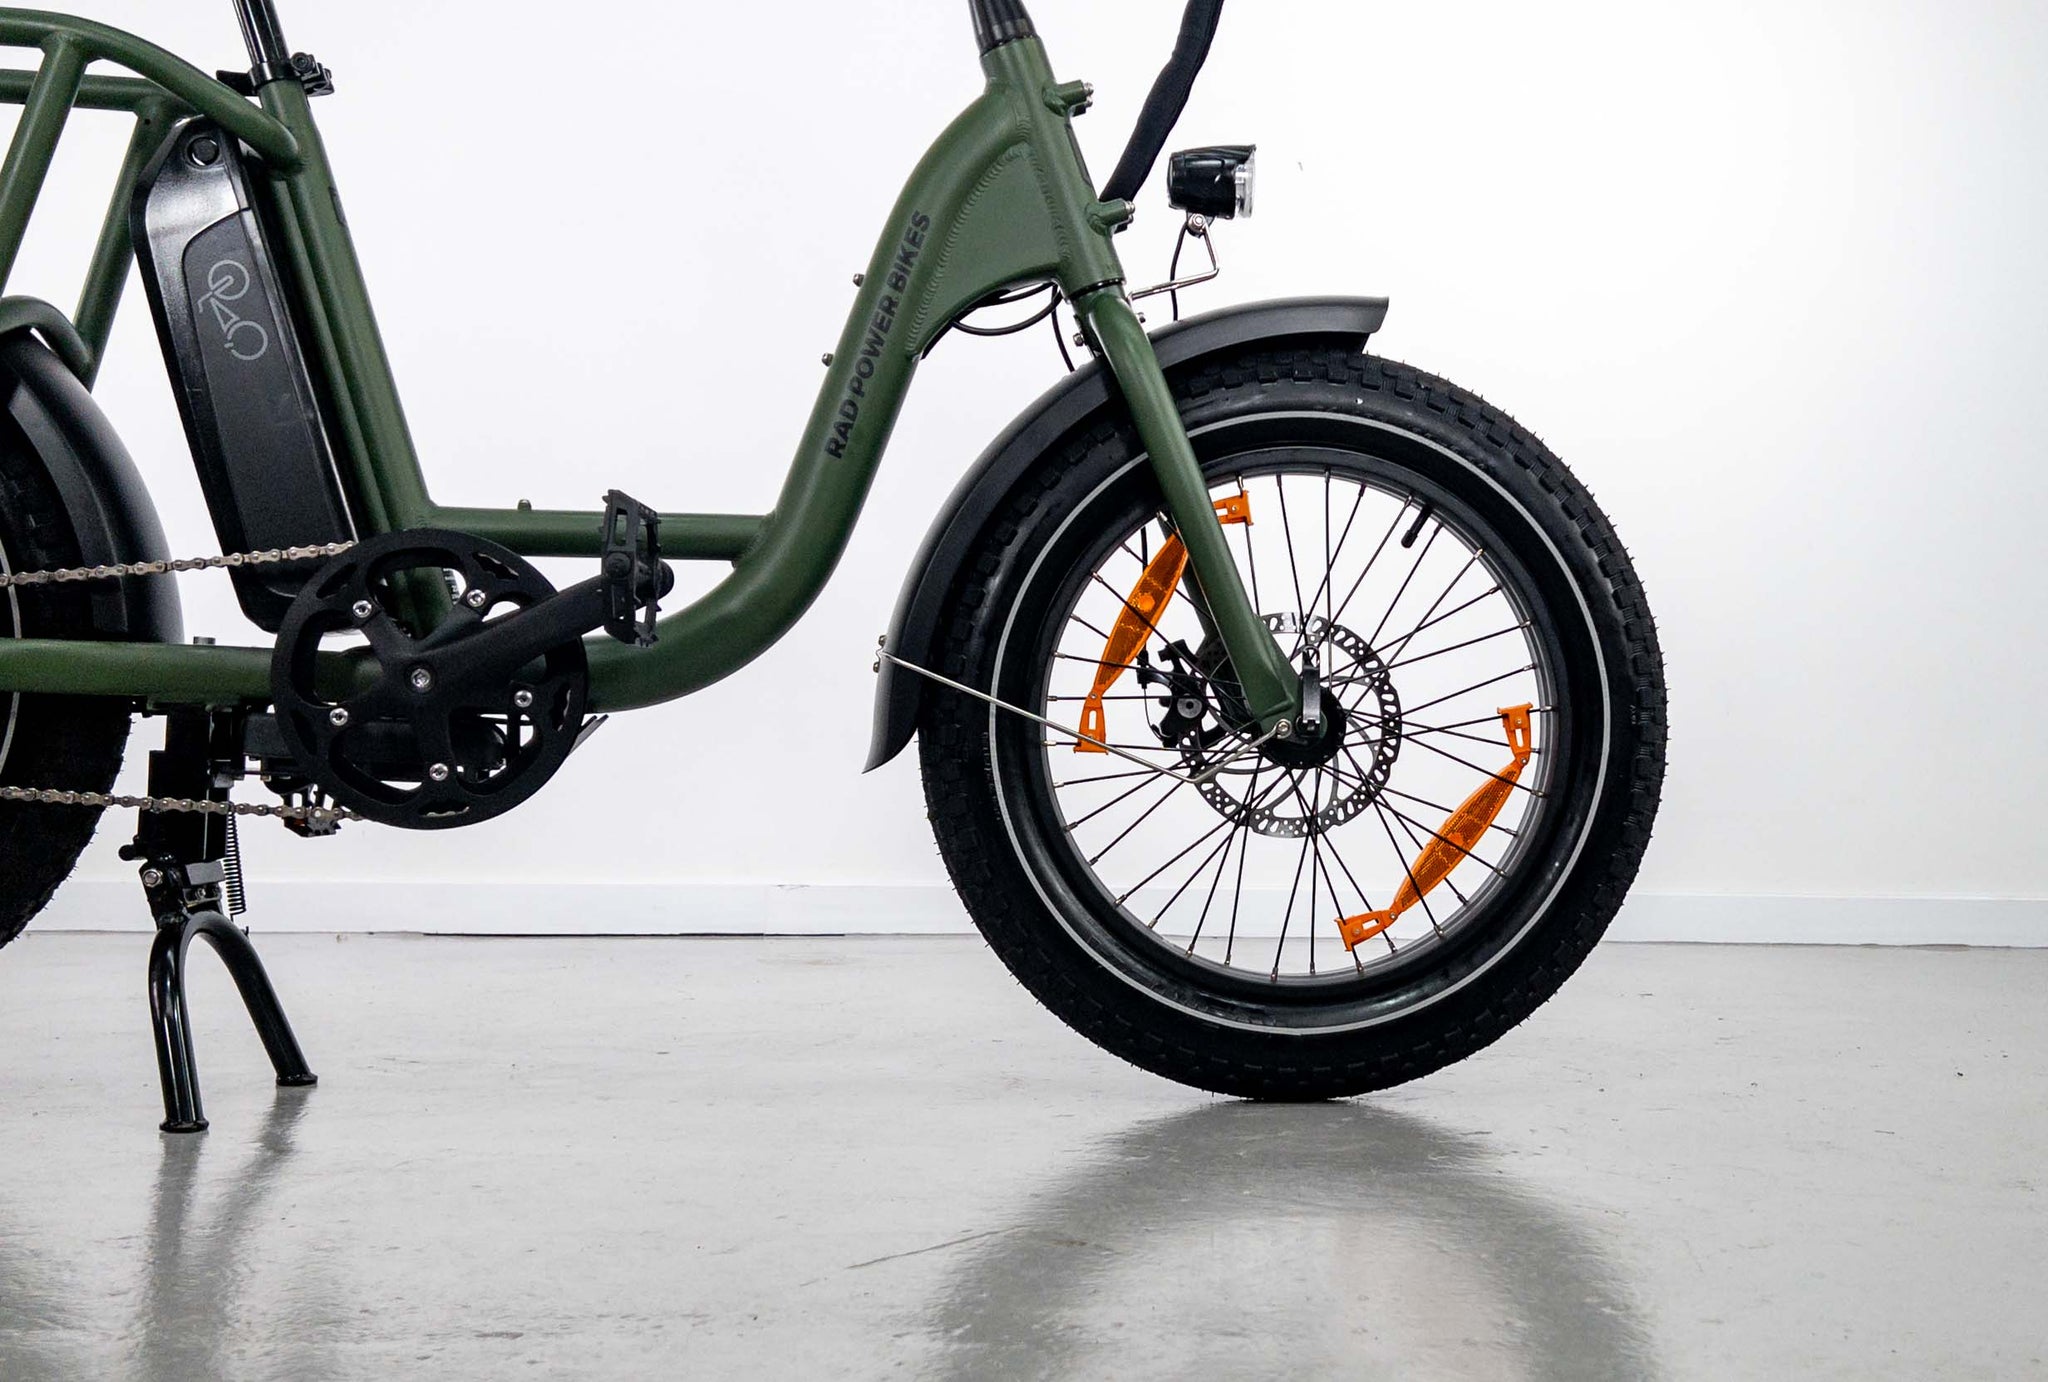 Rad Power RadRunner 2 Green Compact Electric Hybrid Bike - Refurb